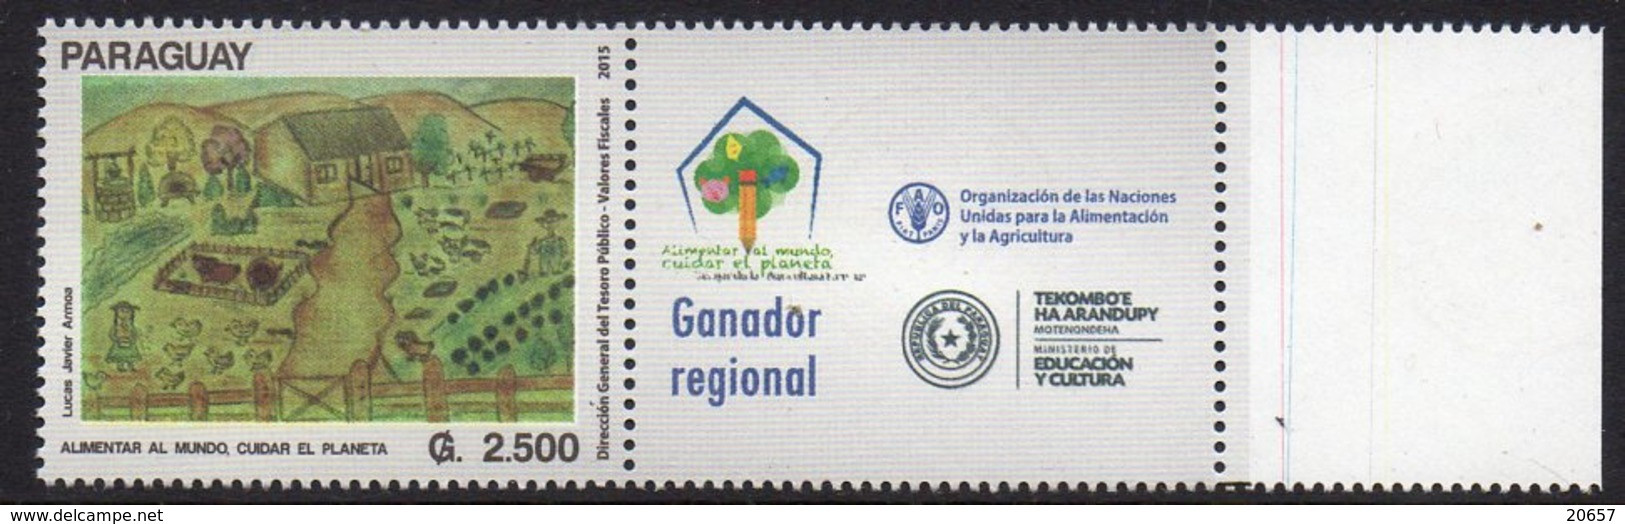 Paraguay 3203 FAO ONU Alimentation - Against Starve